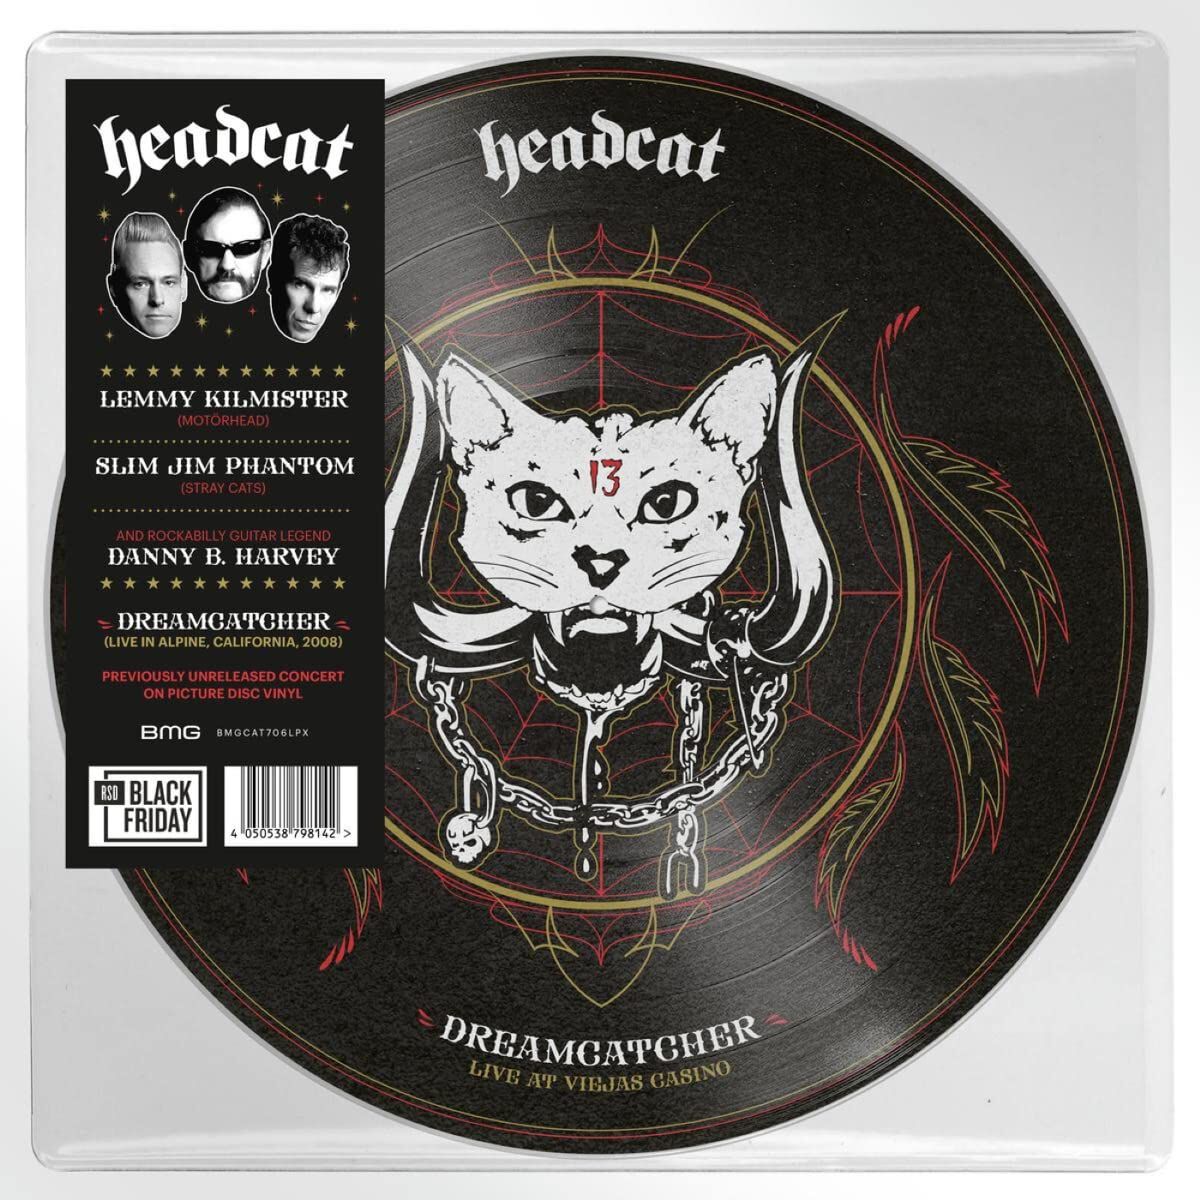 Headcat Dreamcatcher(Live in Viejas Casino) LP coloured